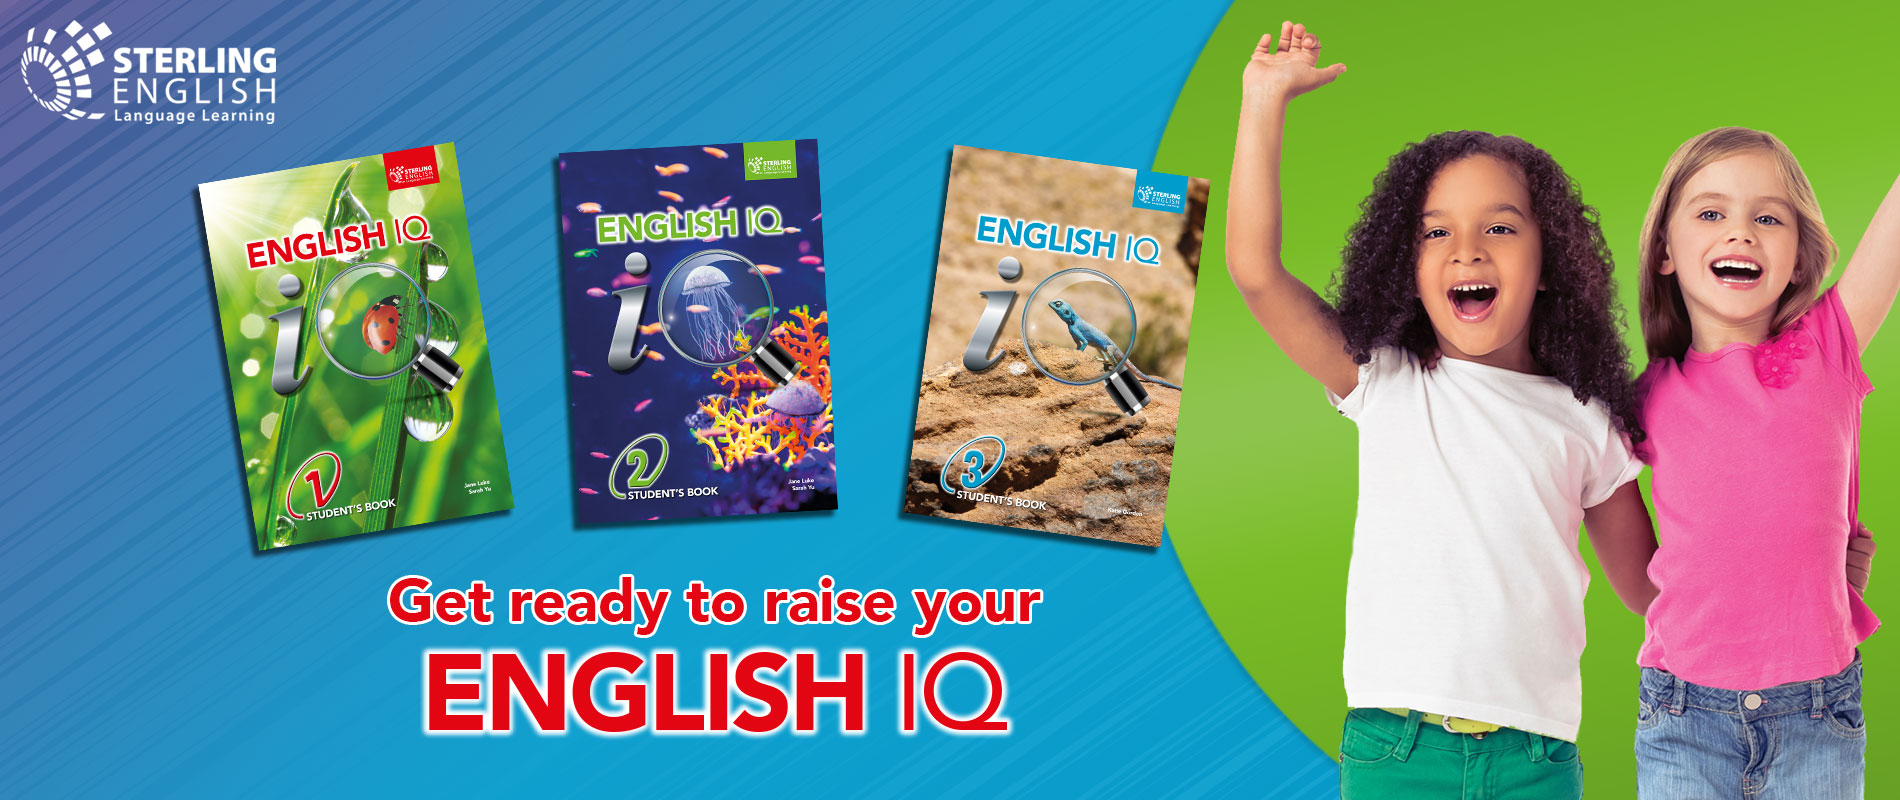 English IQ Courses